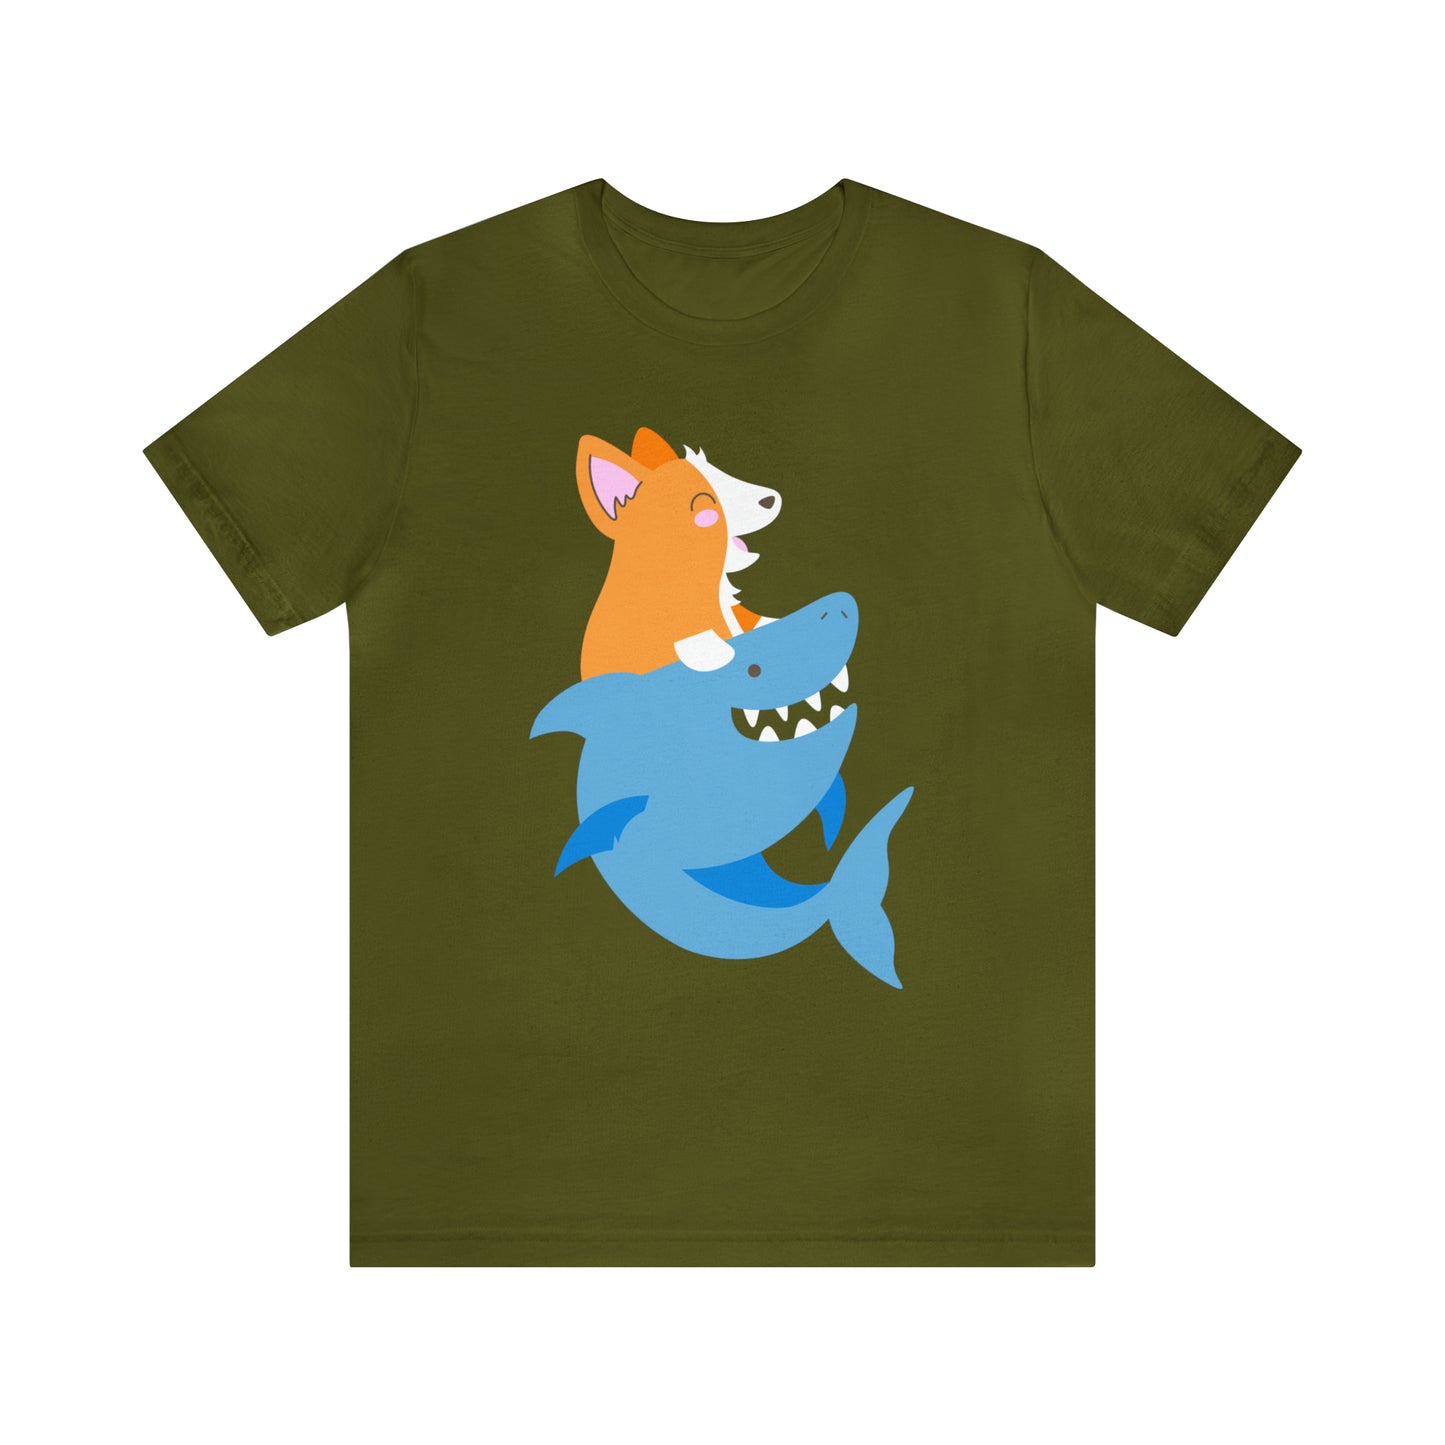 green olive army corgi dog shark fish woman man t-shirt unisex short sleeve shirt